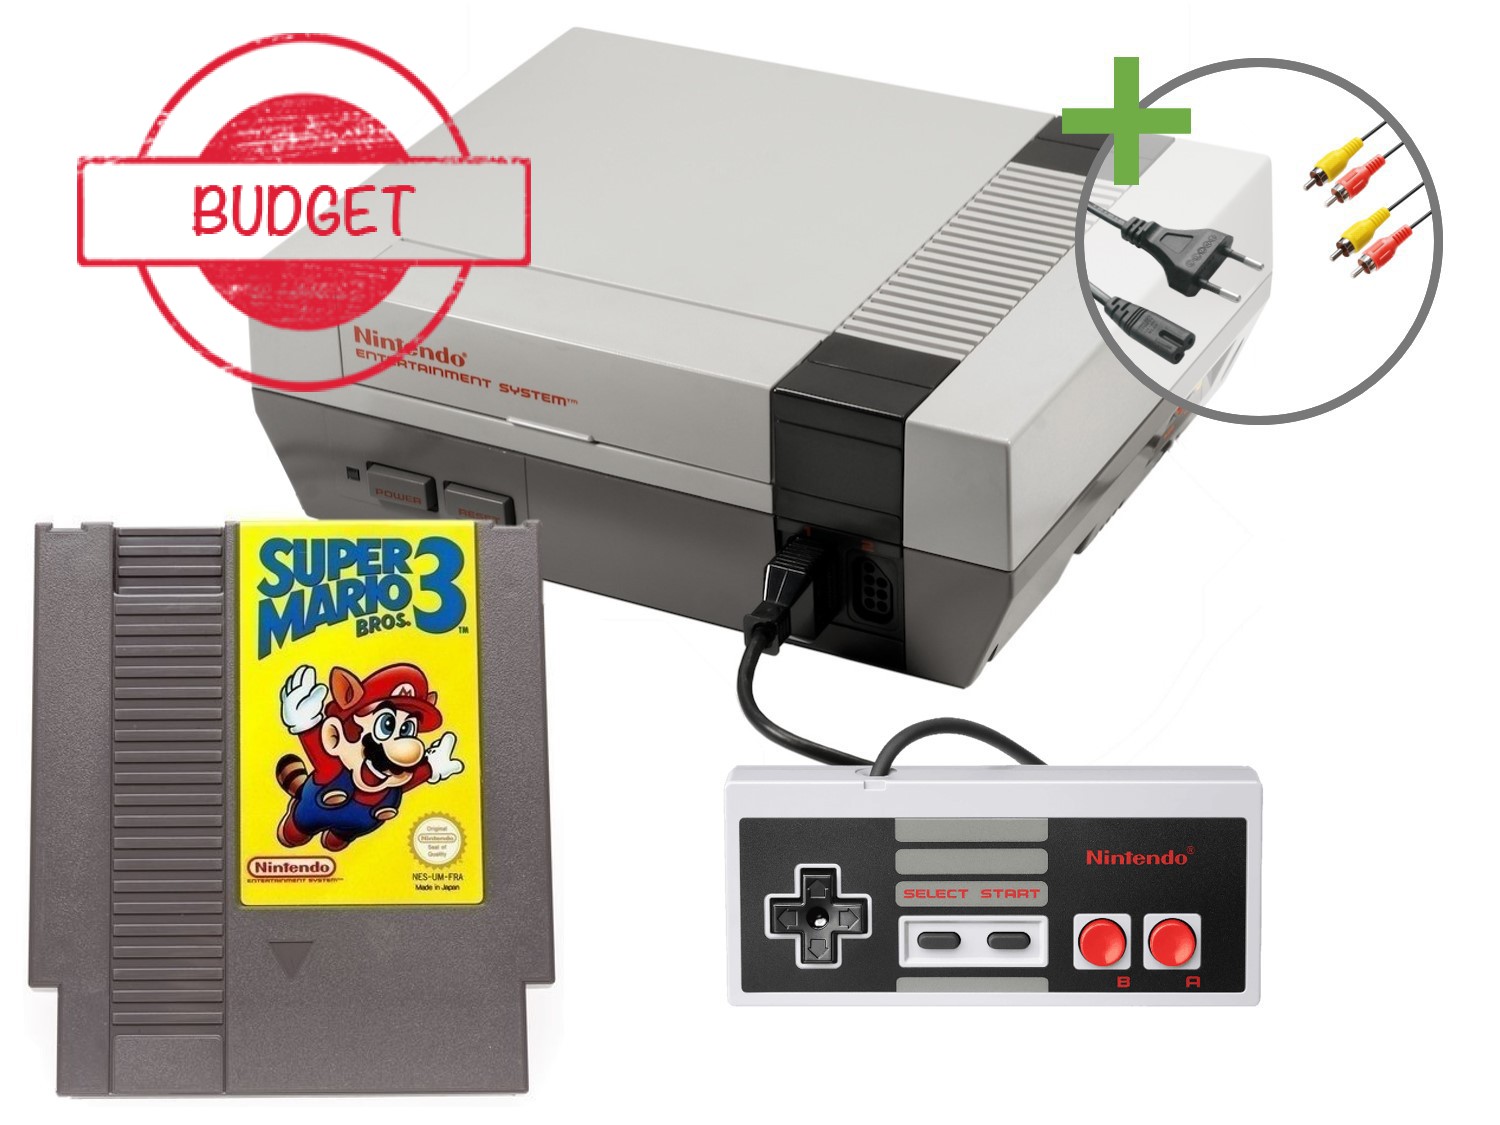 Nintendo NES Starter Pack - Super Mario Bros. 3 Control Deck Edition - Budget Kopen | Nintendo NES Hardware